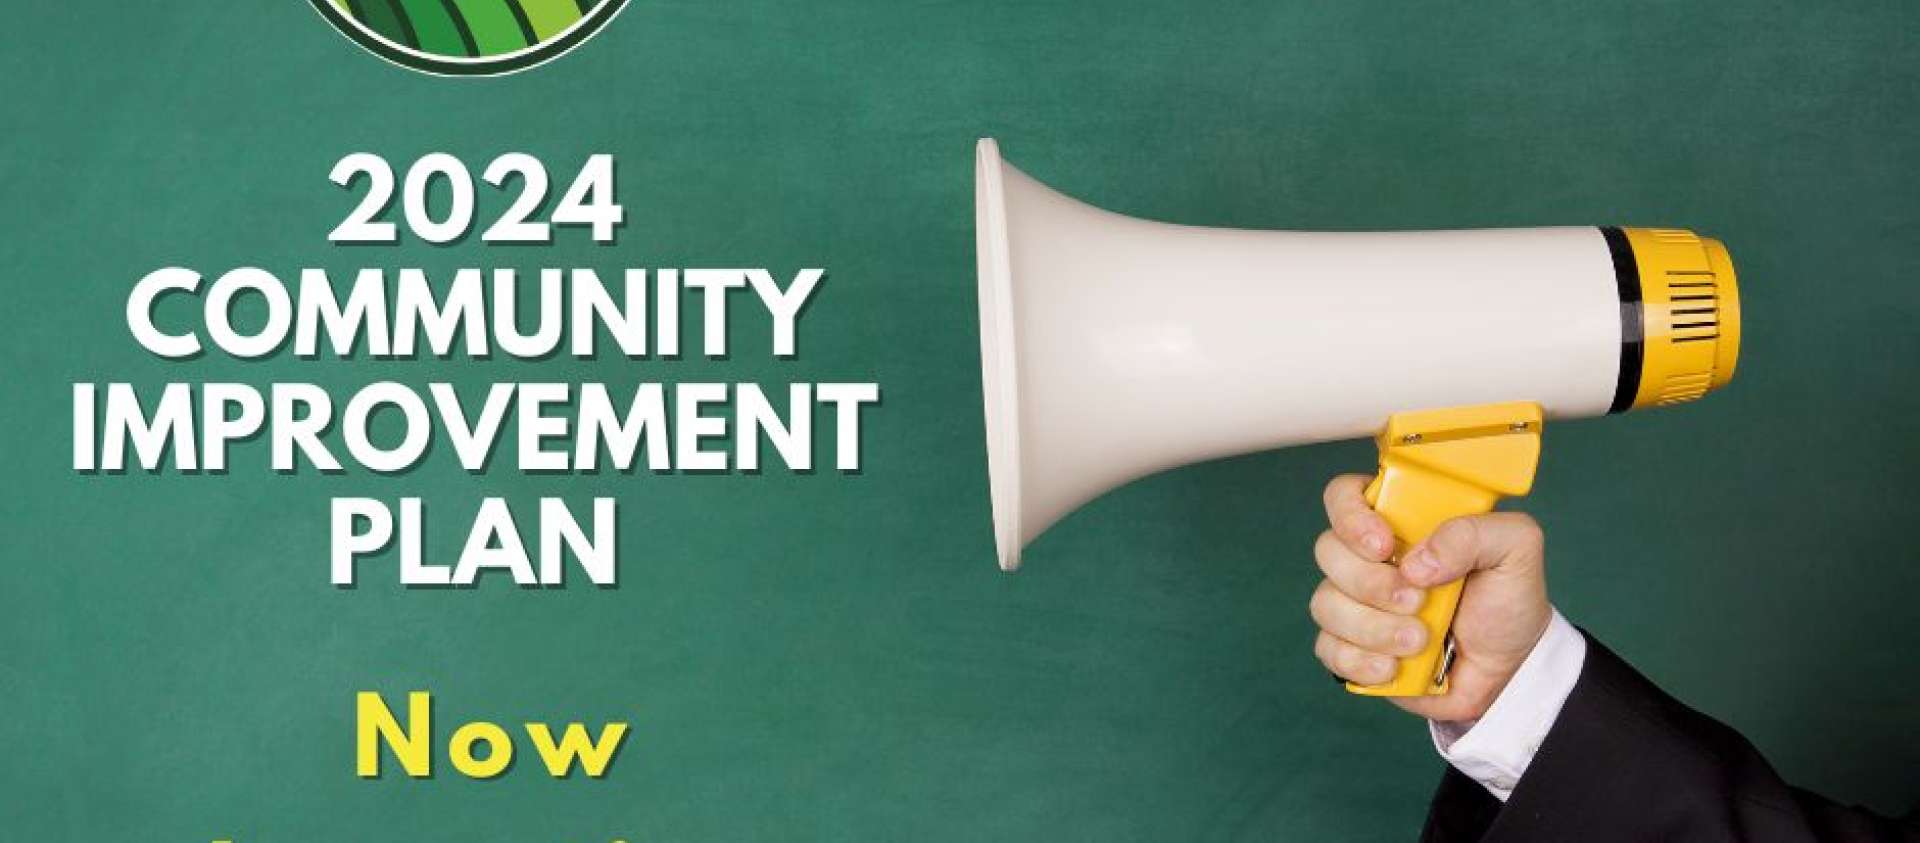 Picture of megaphone announcing the 2024 Community Improvement Plan